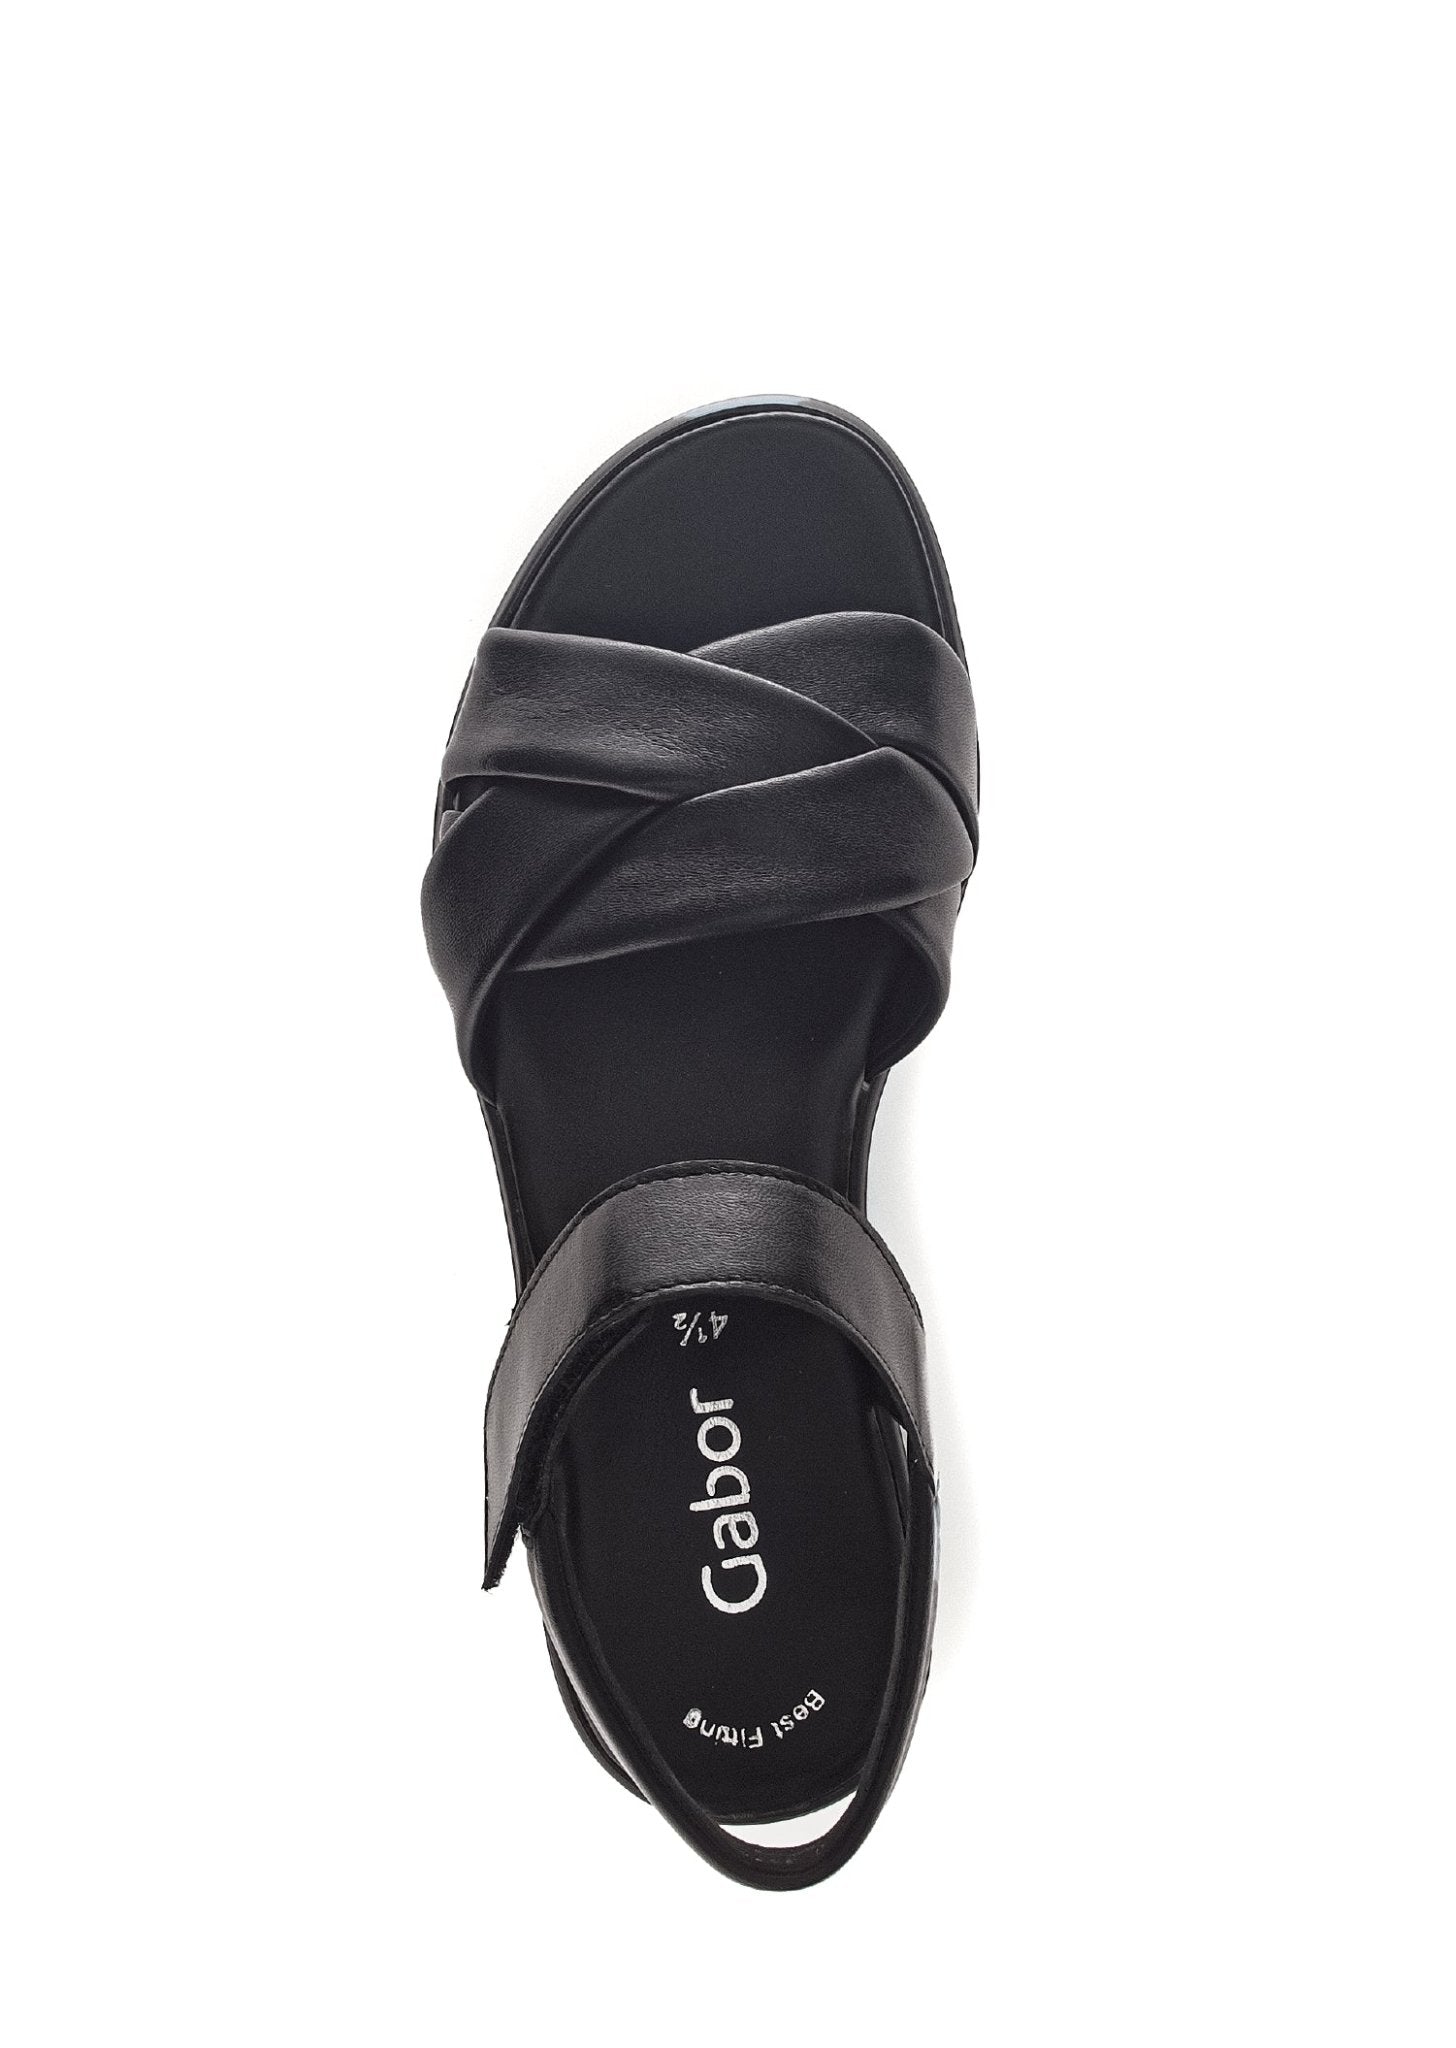 '24.622.27' women's sandal - Black - Chaplinshoes'24.622.27' women's sandal - BlackGabor